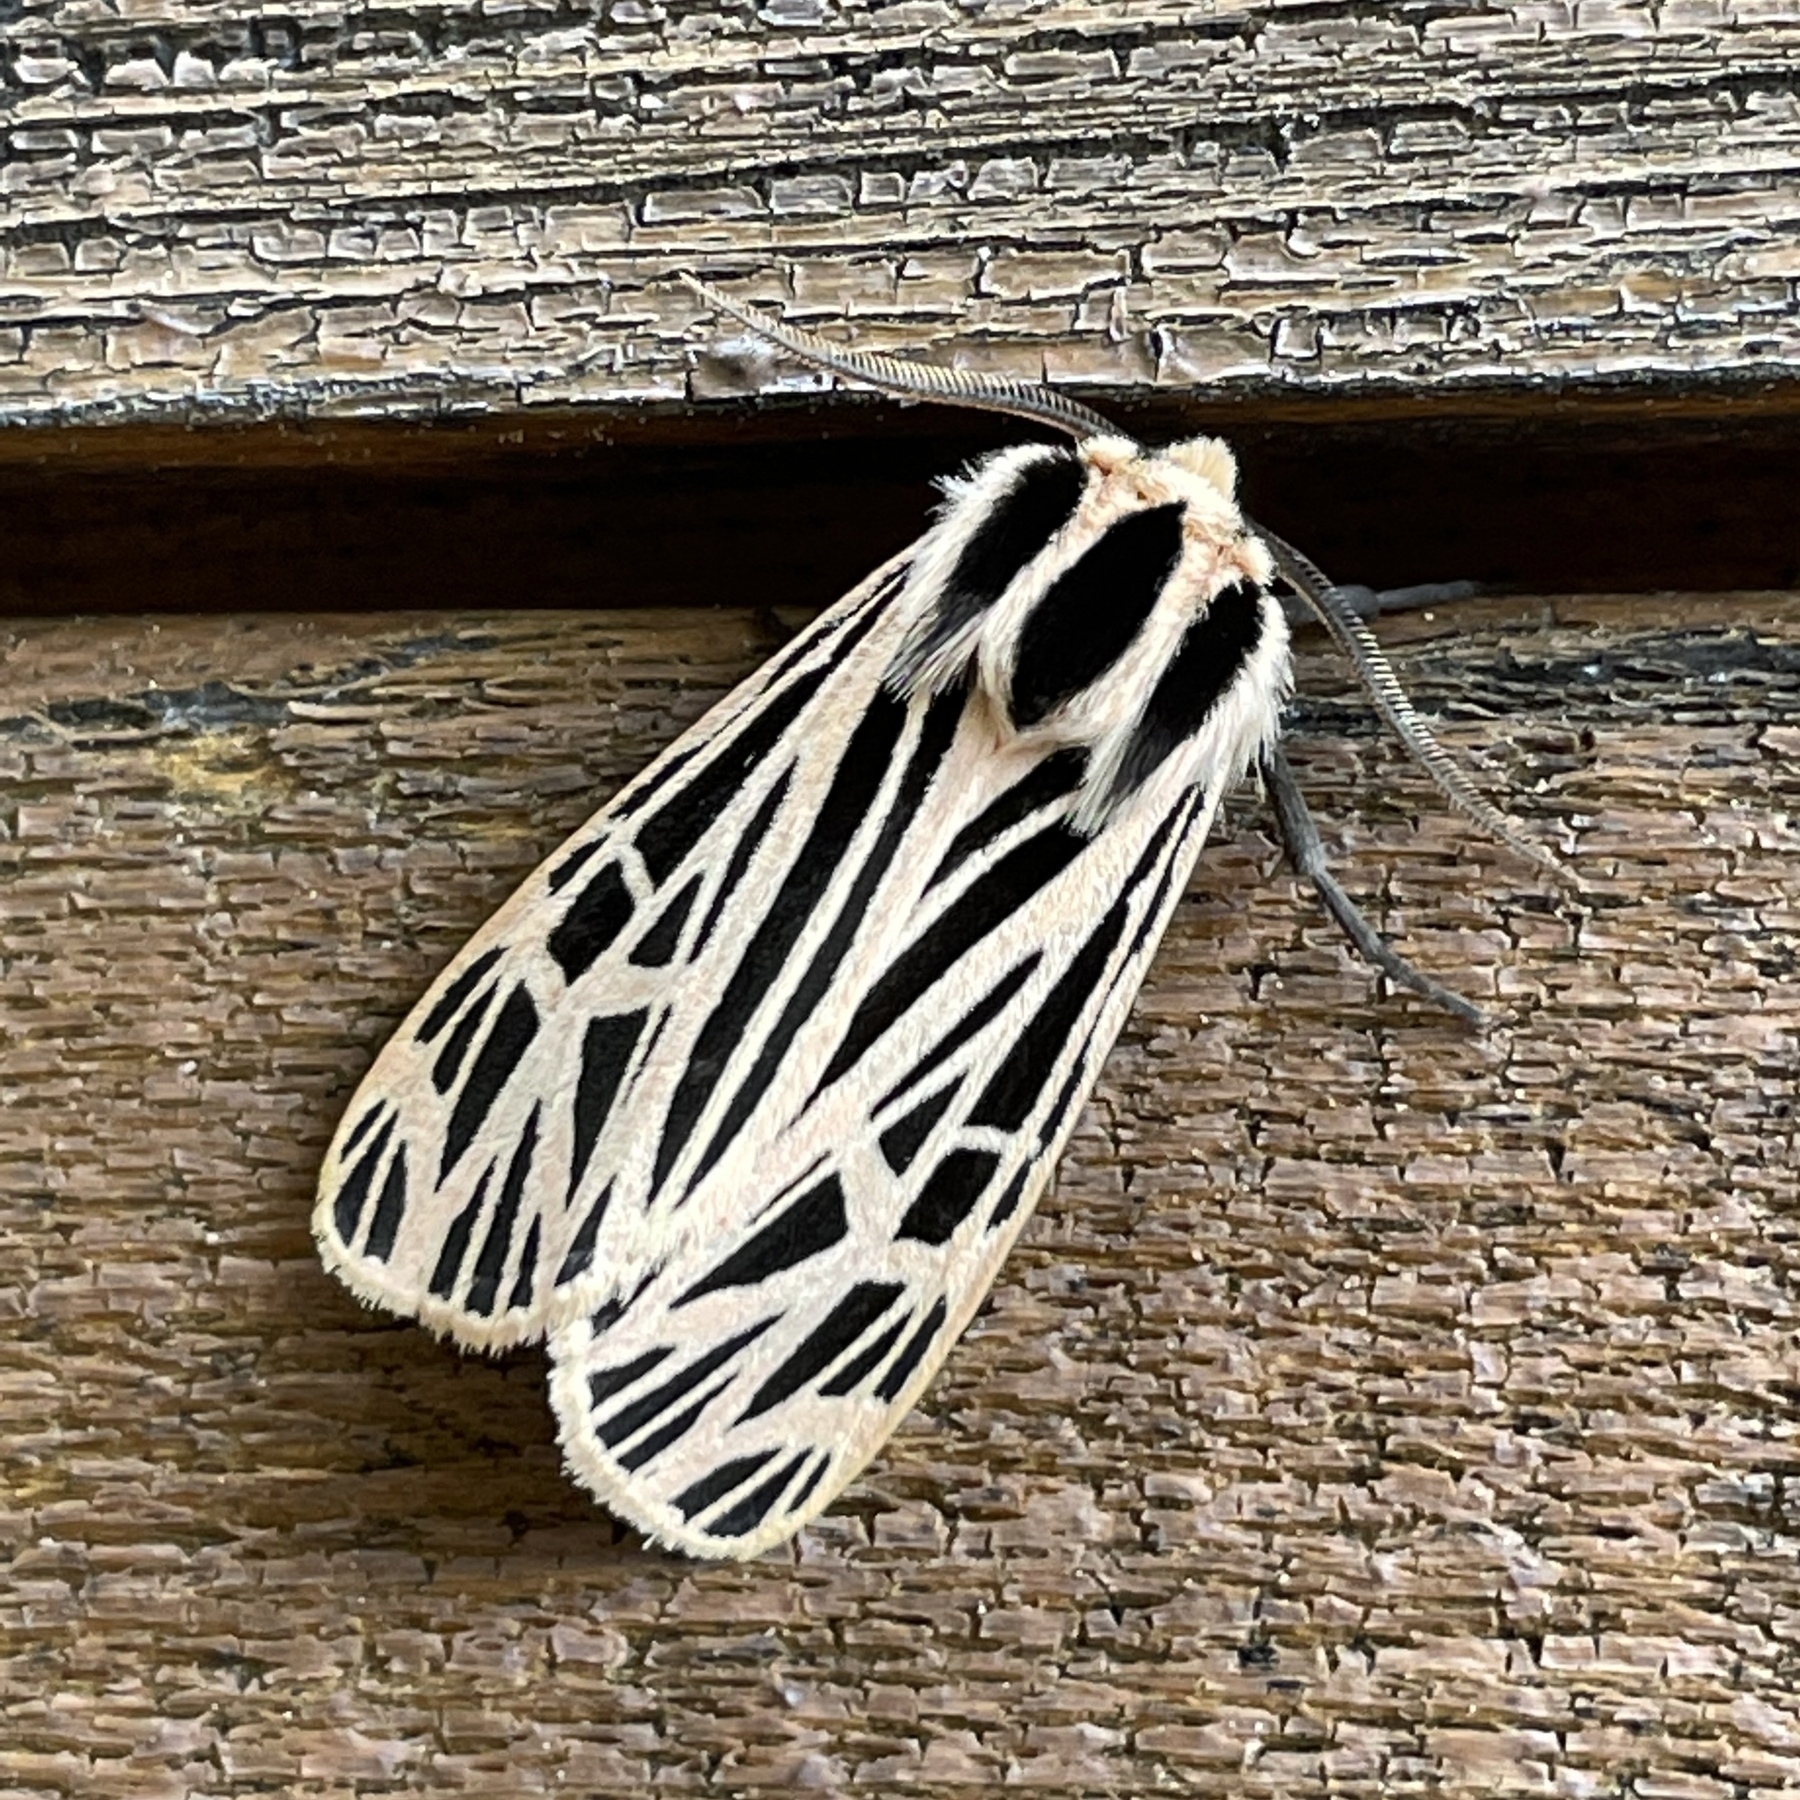 Moth on wood shingle.